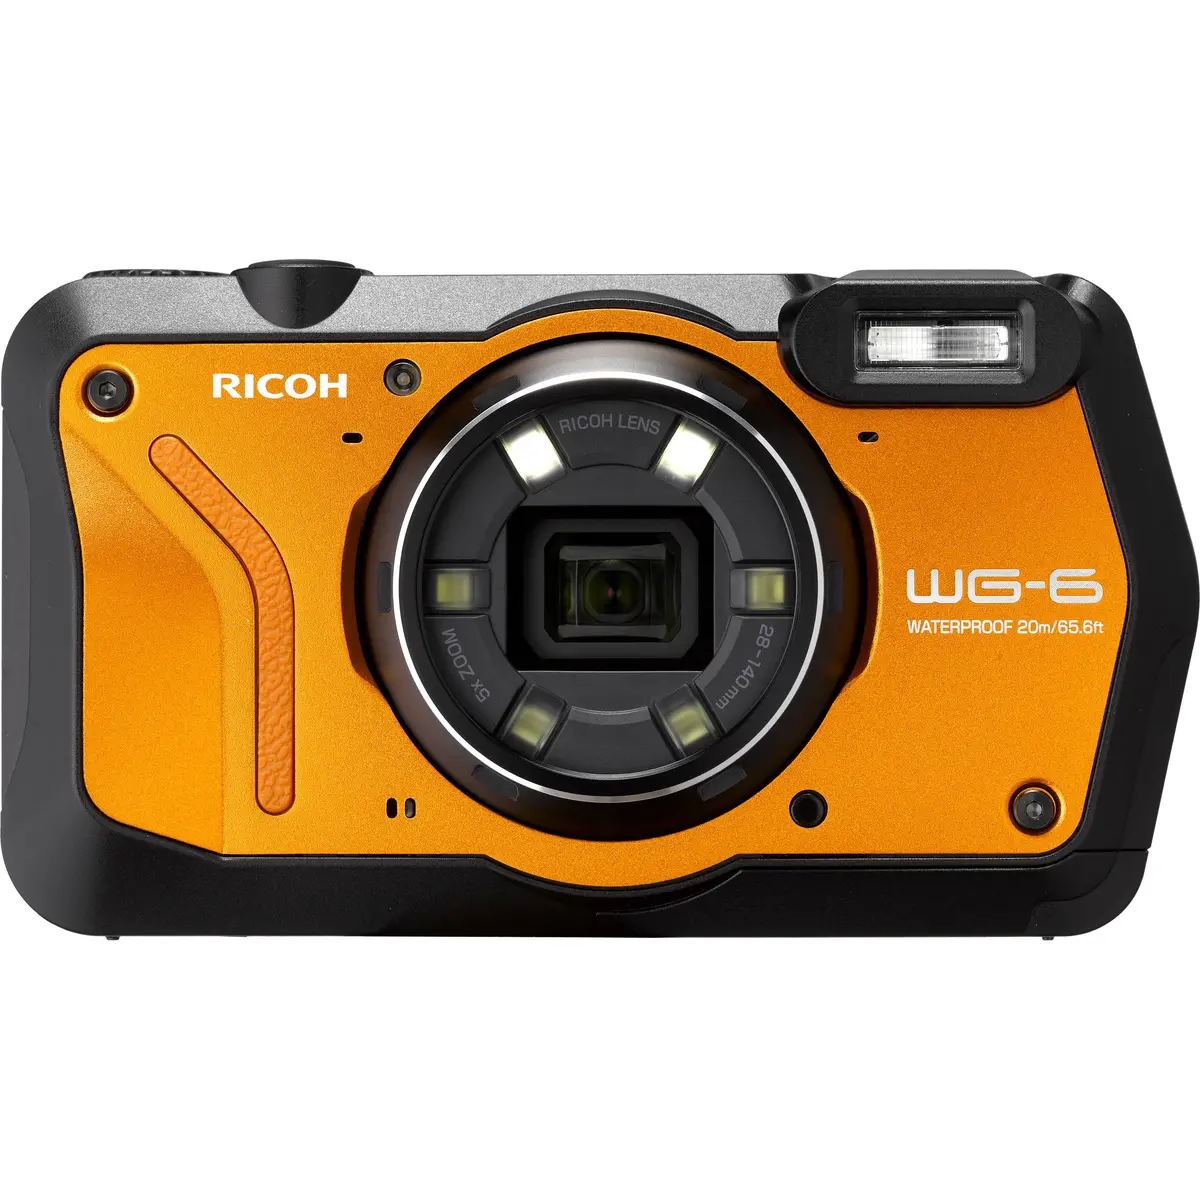 1. Ricoh WG-6 Orange